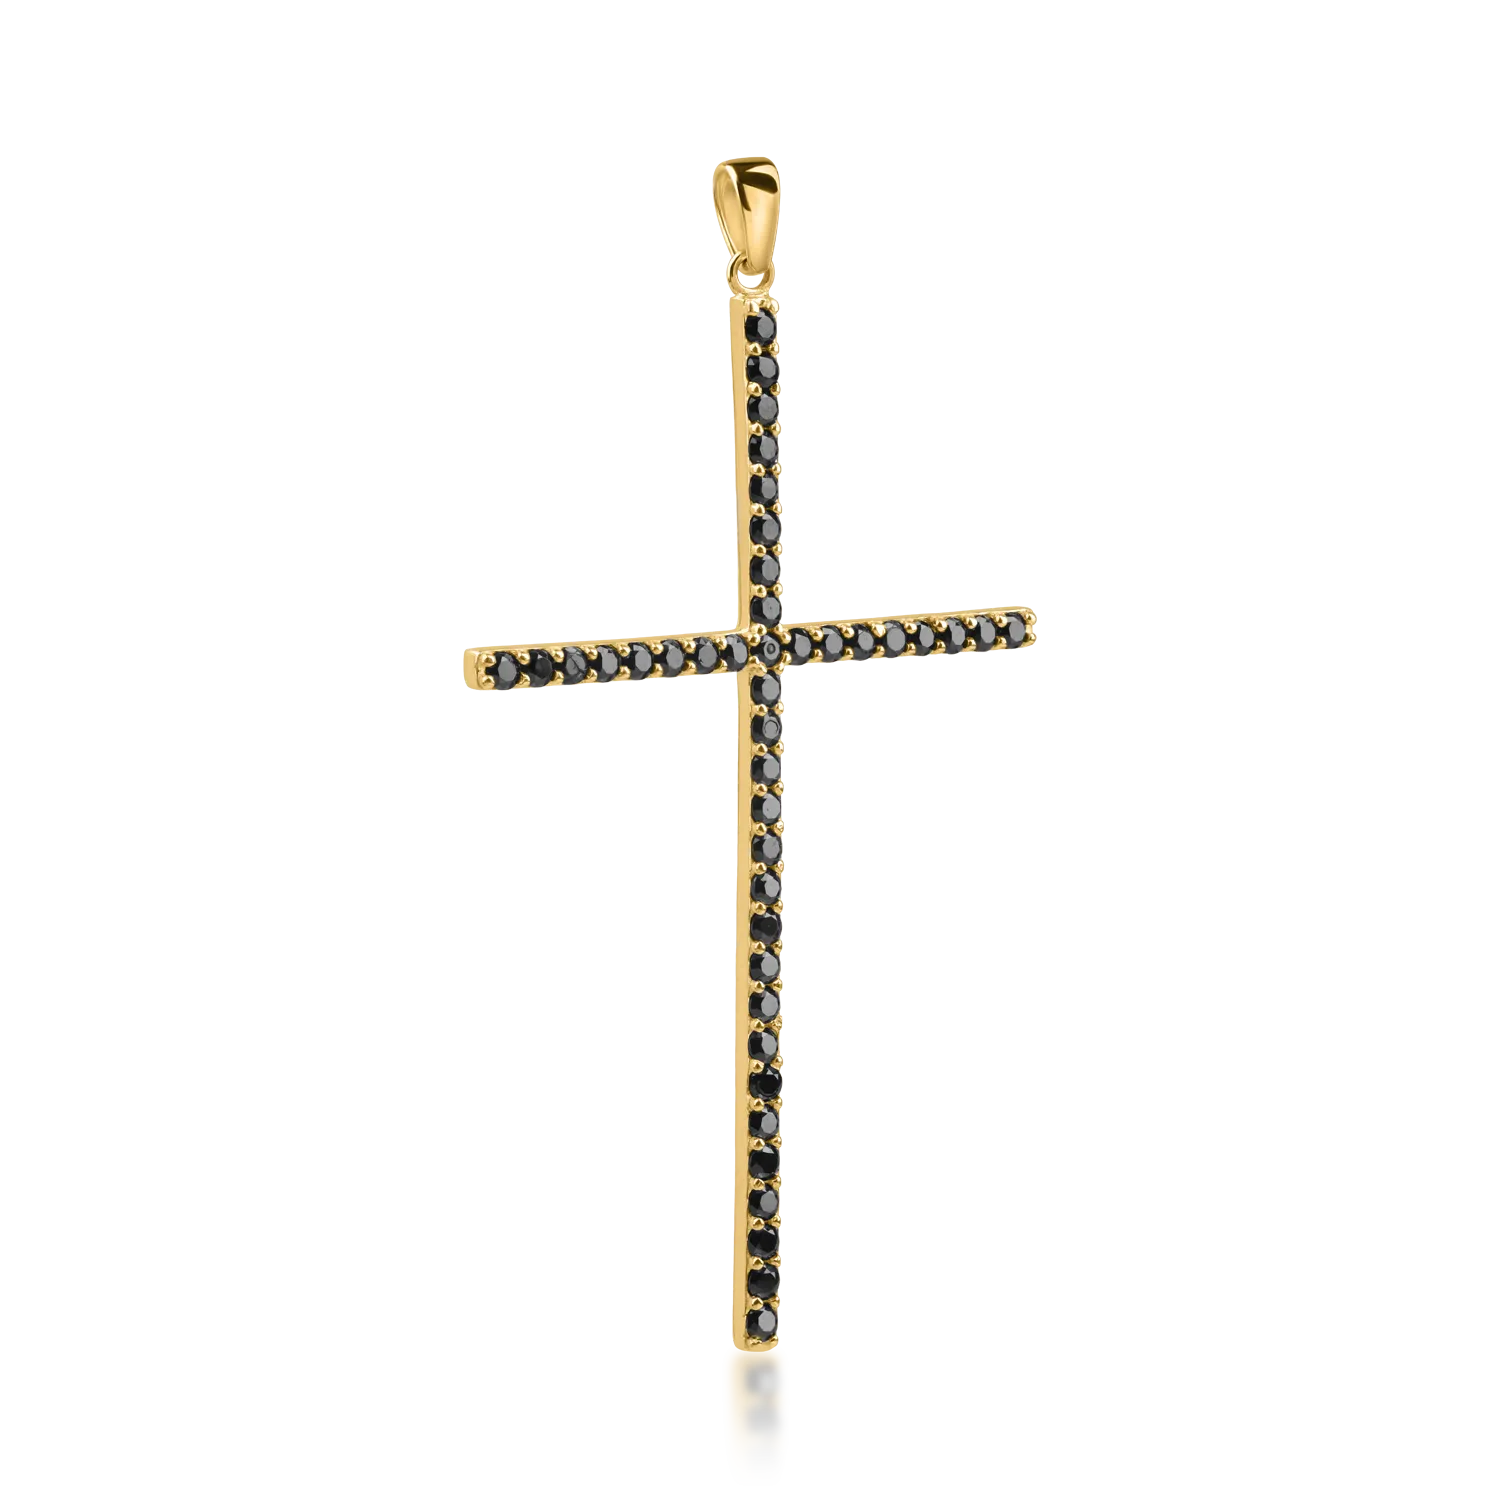 Yellow gold cross pendant